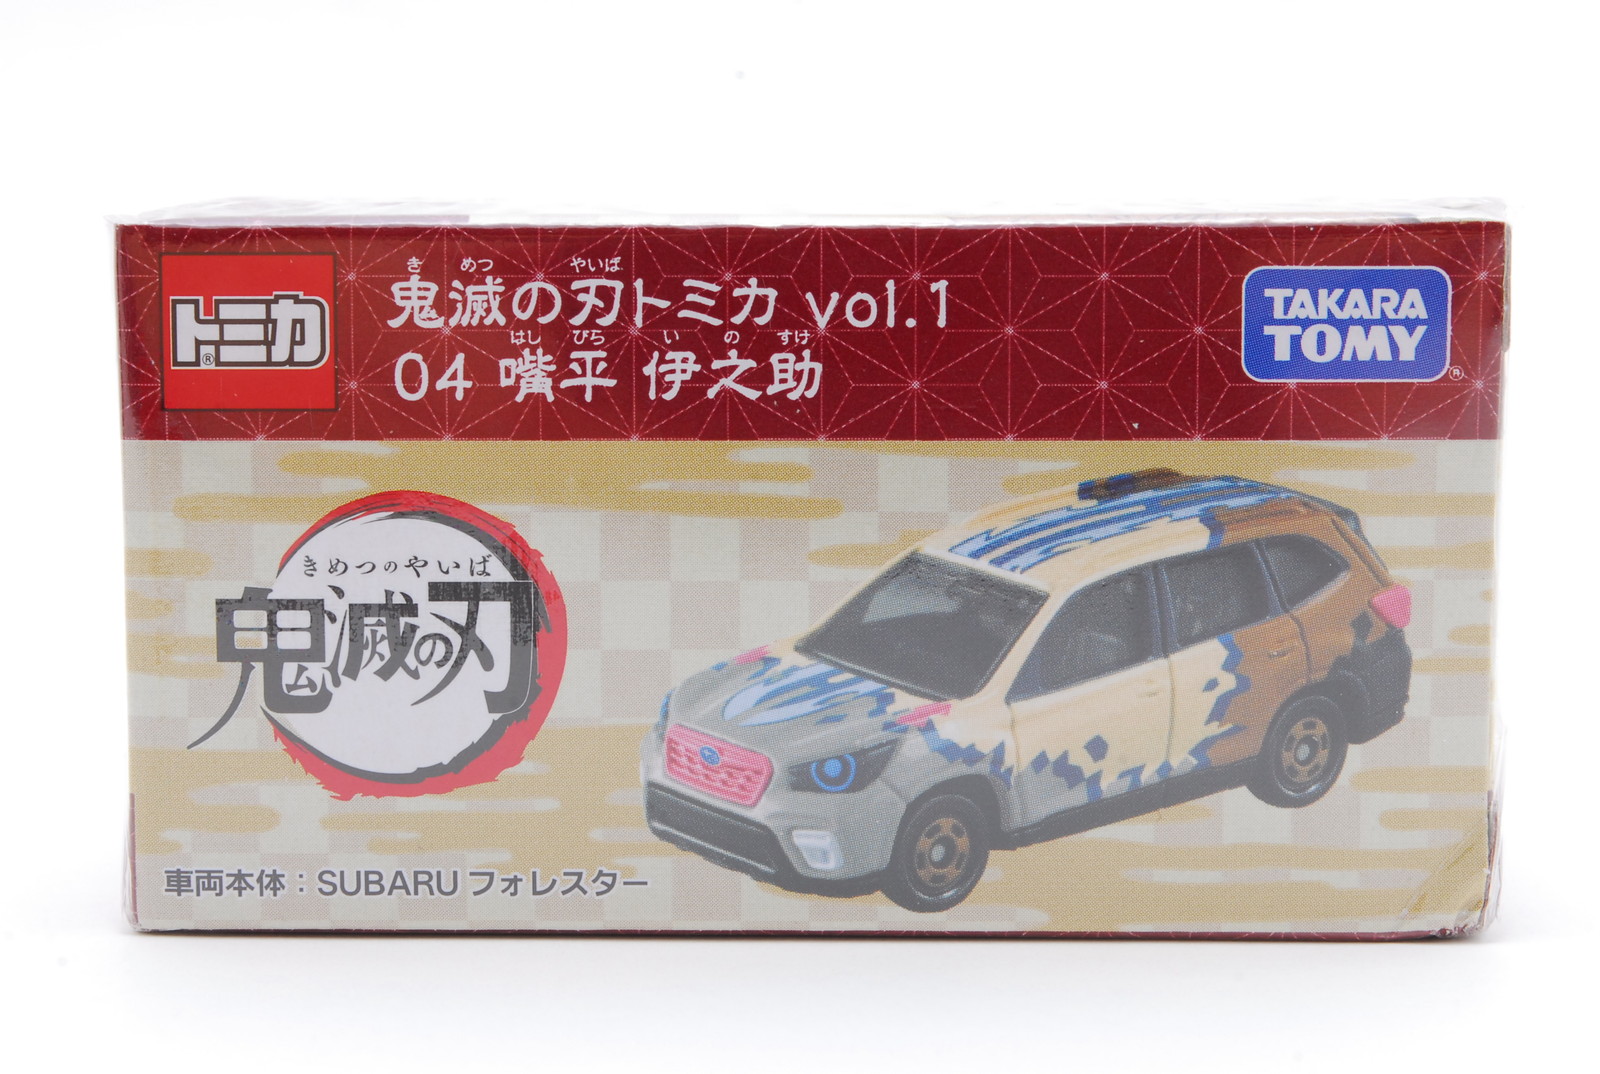 PROMOTION. UNUSED TAKARA TOMY TOMICA Demon Slayer Toy Car Inosuke Hashibira Kimetsu No Yaiba from Japan